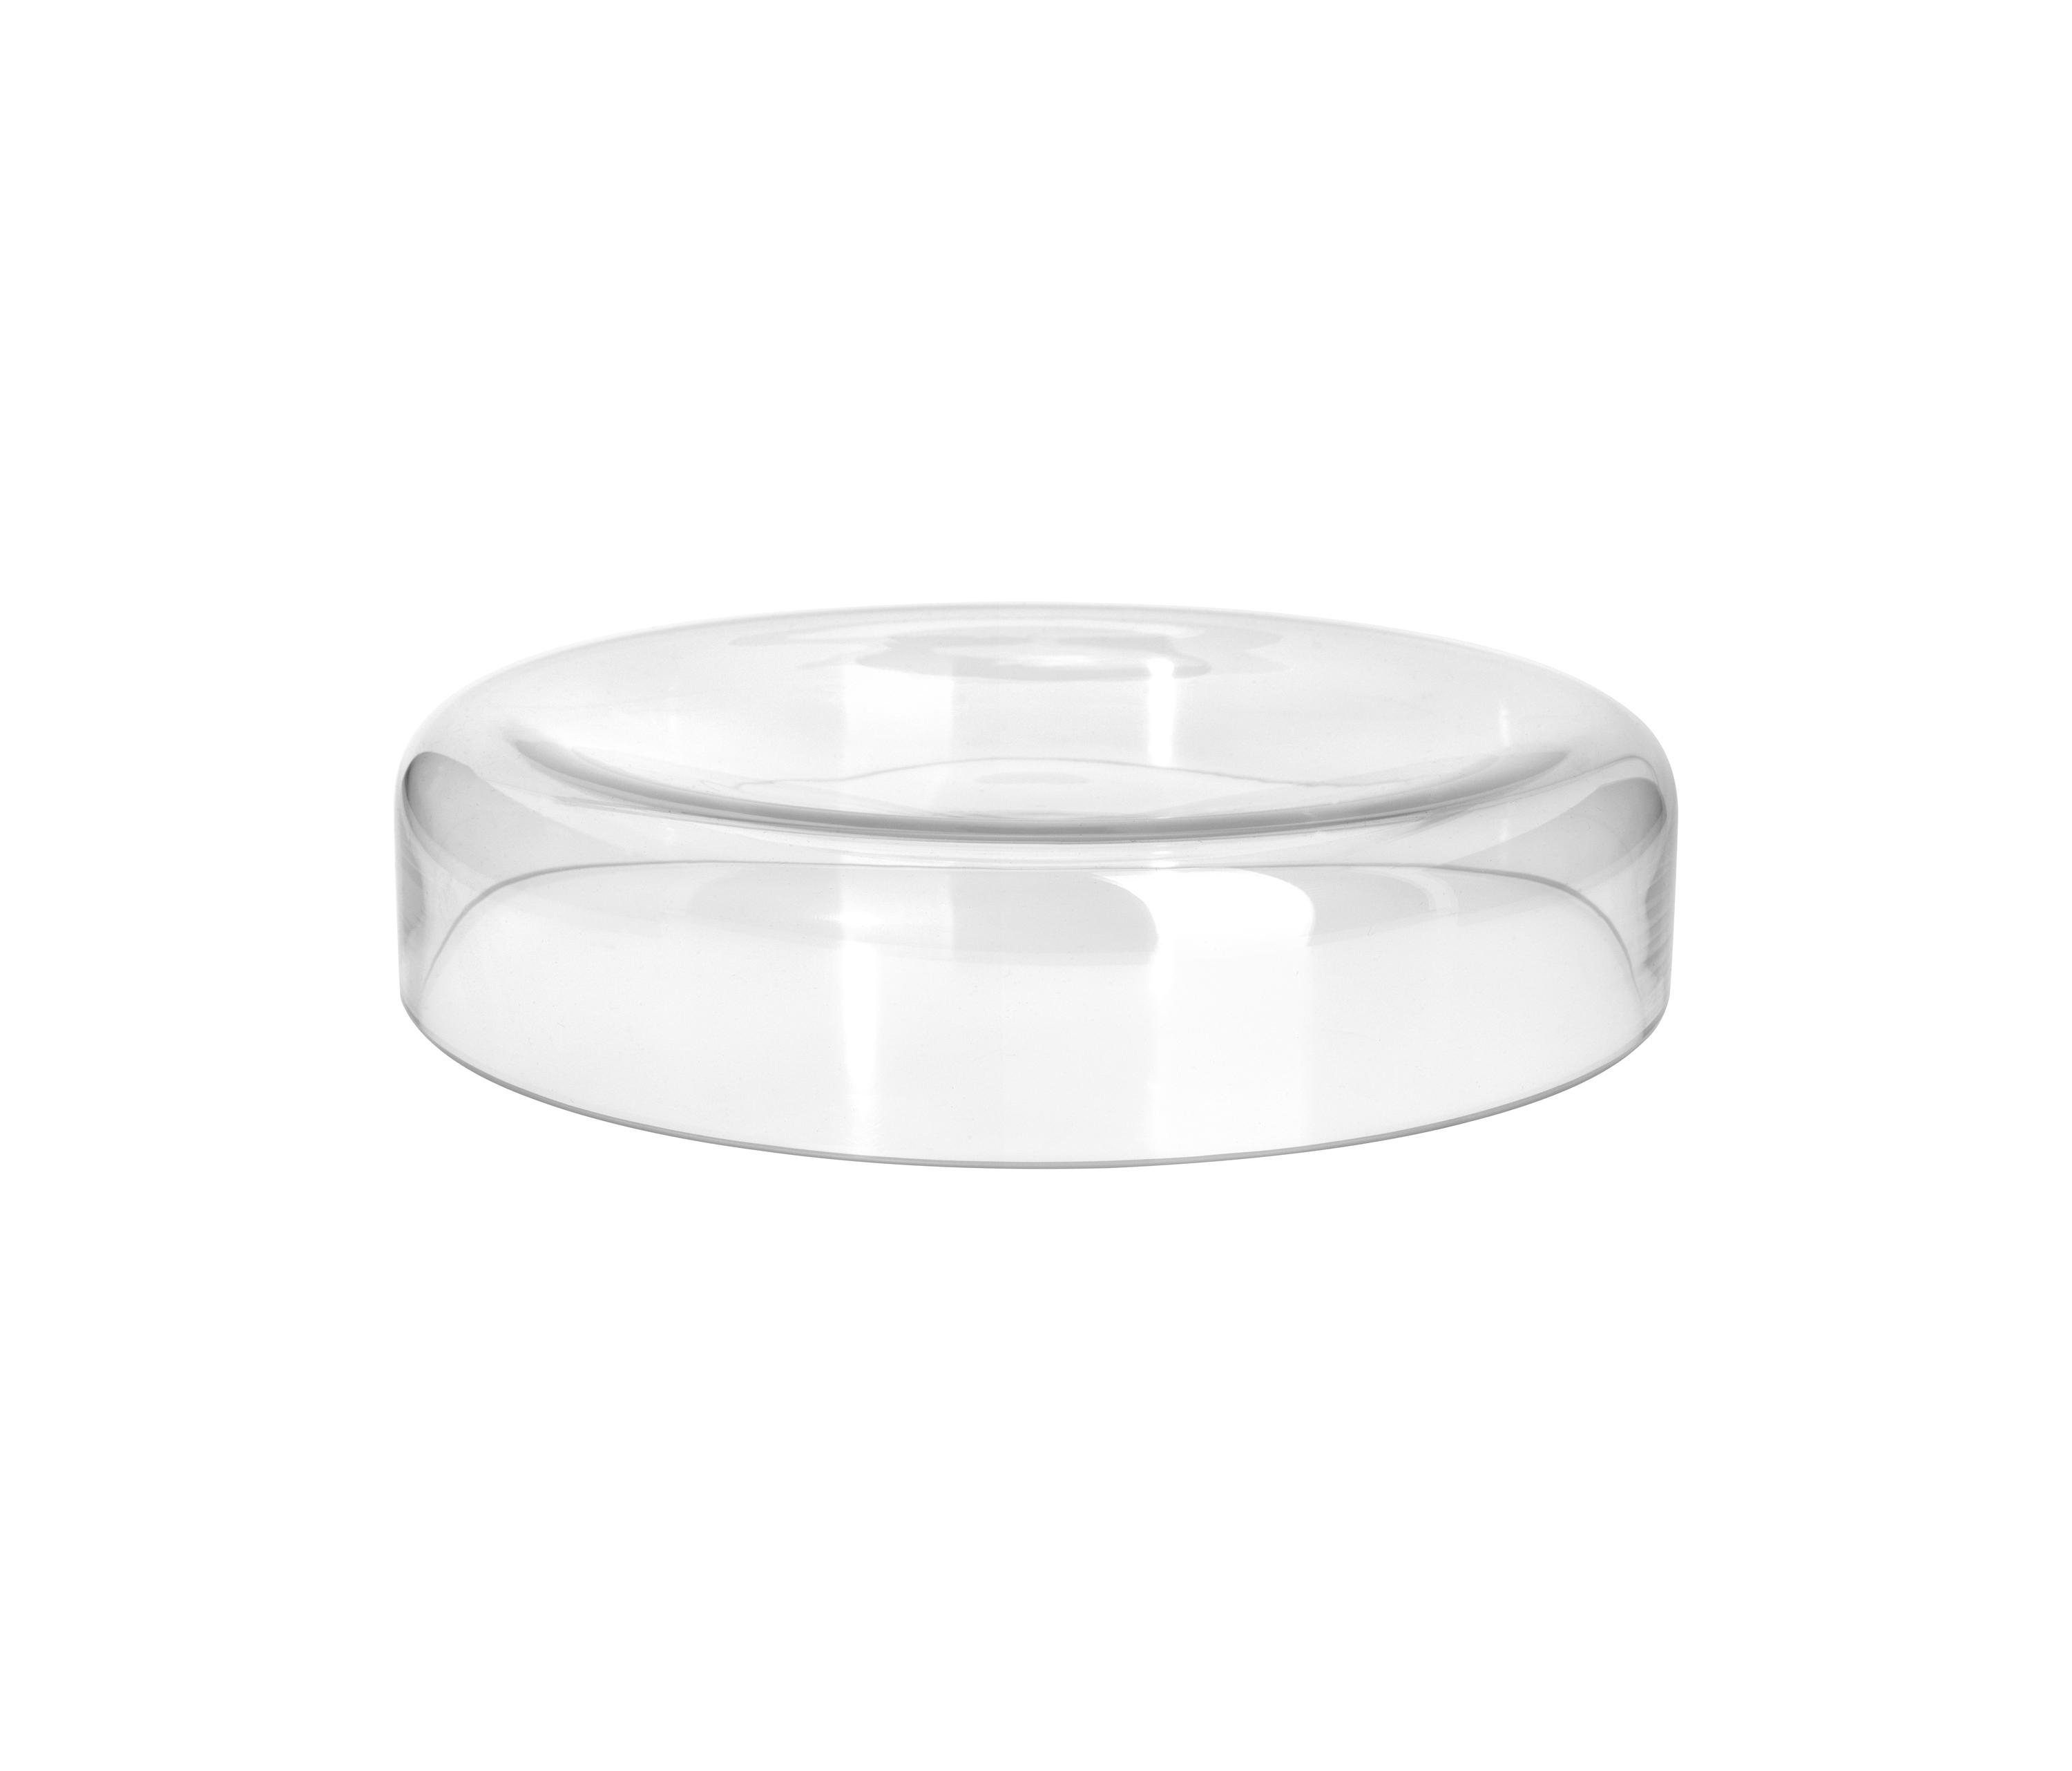 JAR Glass Dish & designer furniture | Architonic